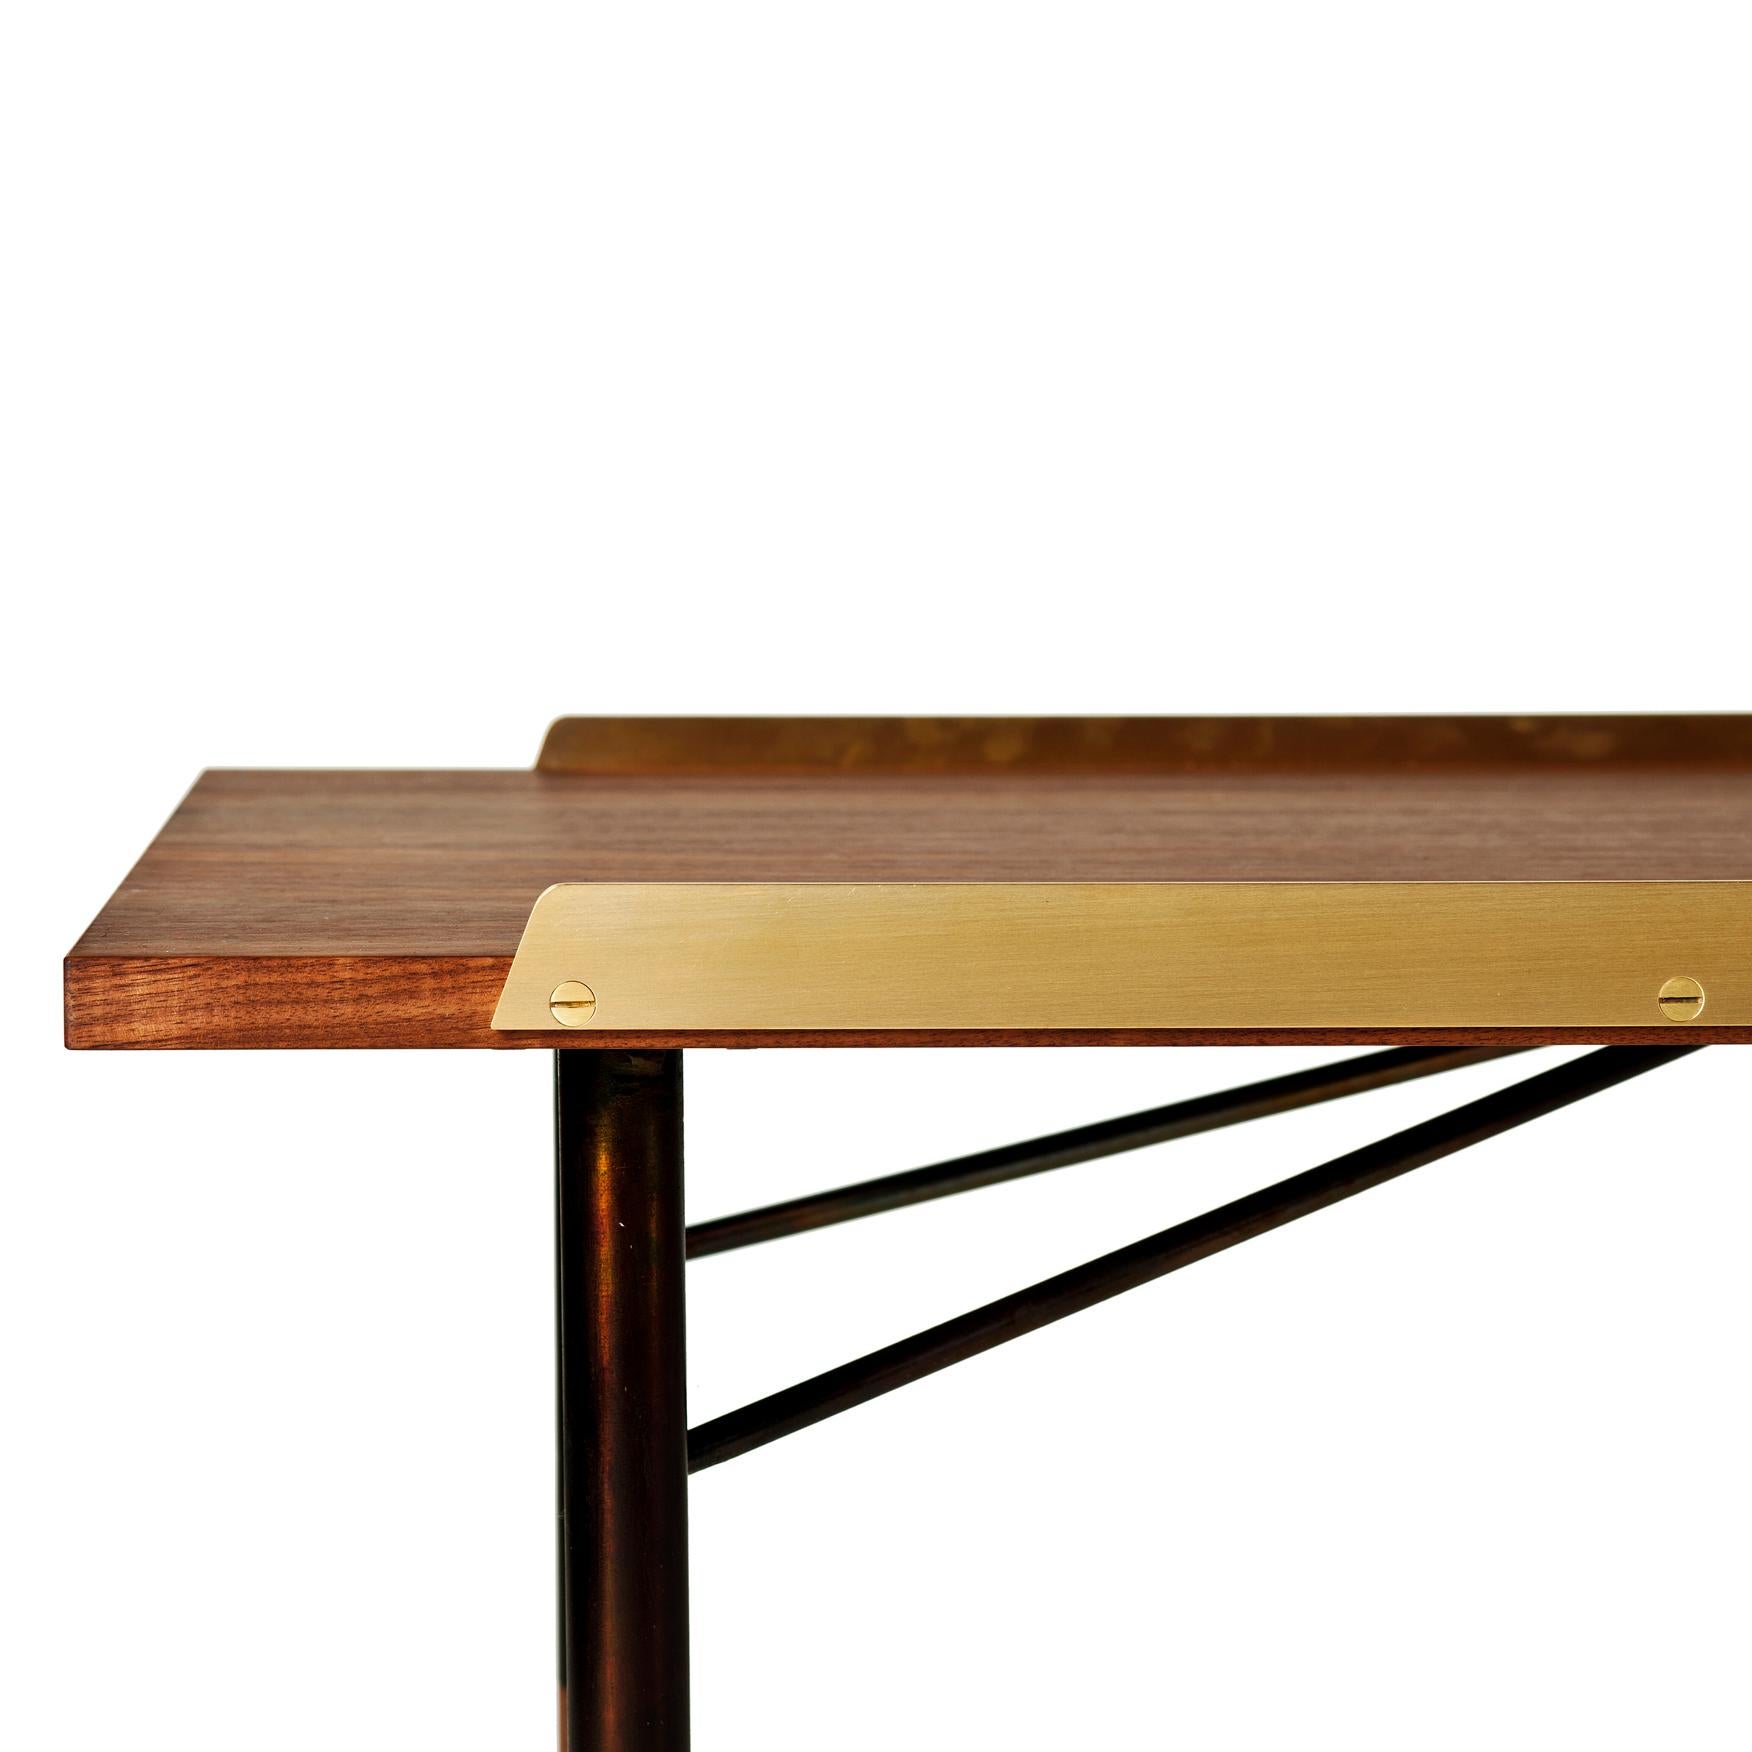 Finn Juhl Table Bench Wood and Brass 1